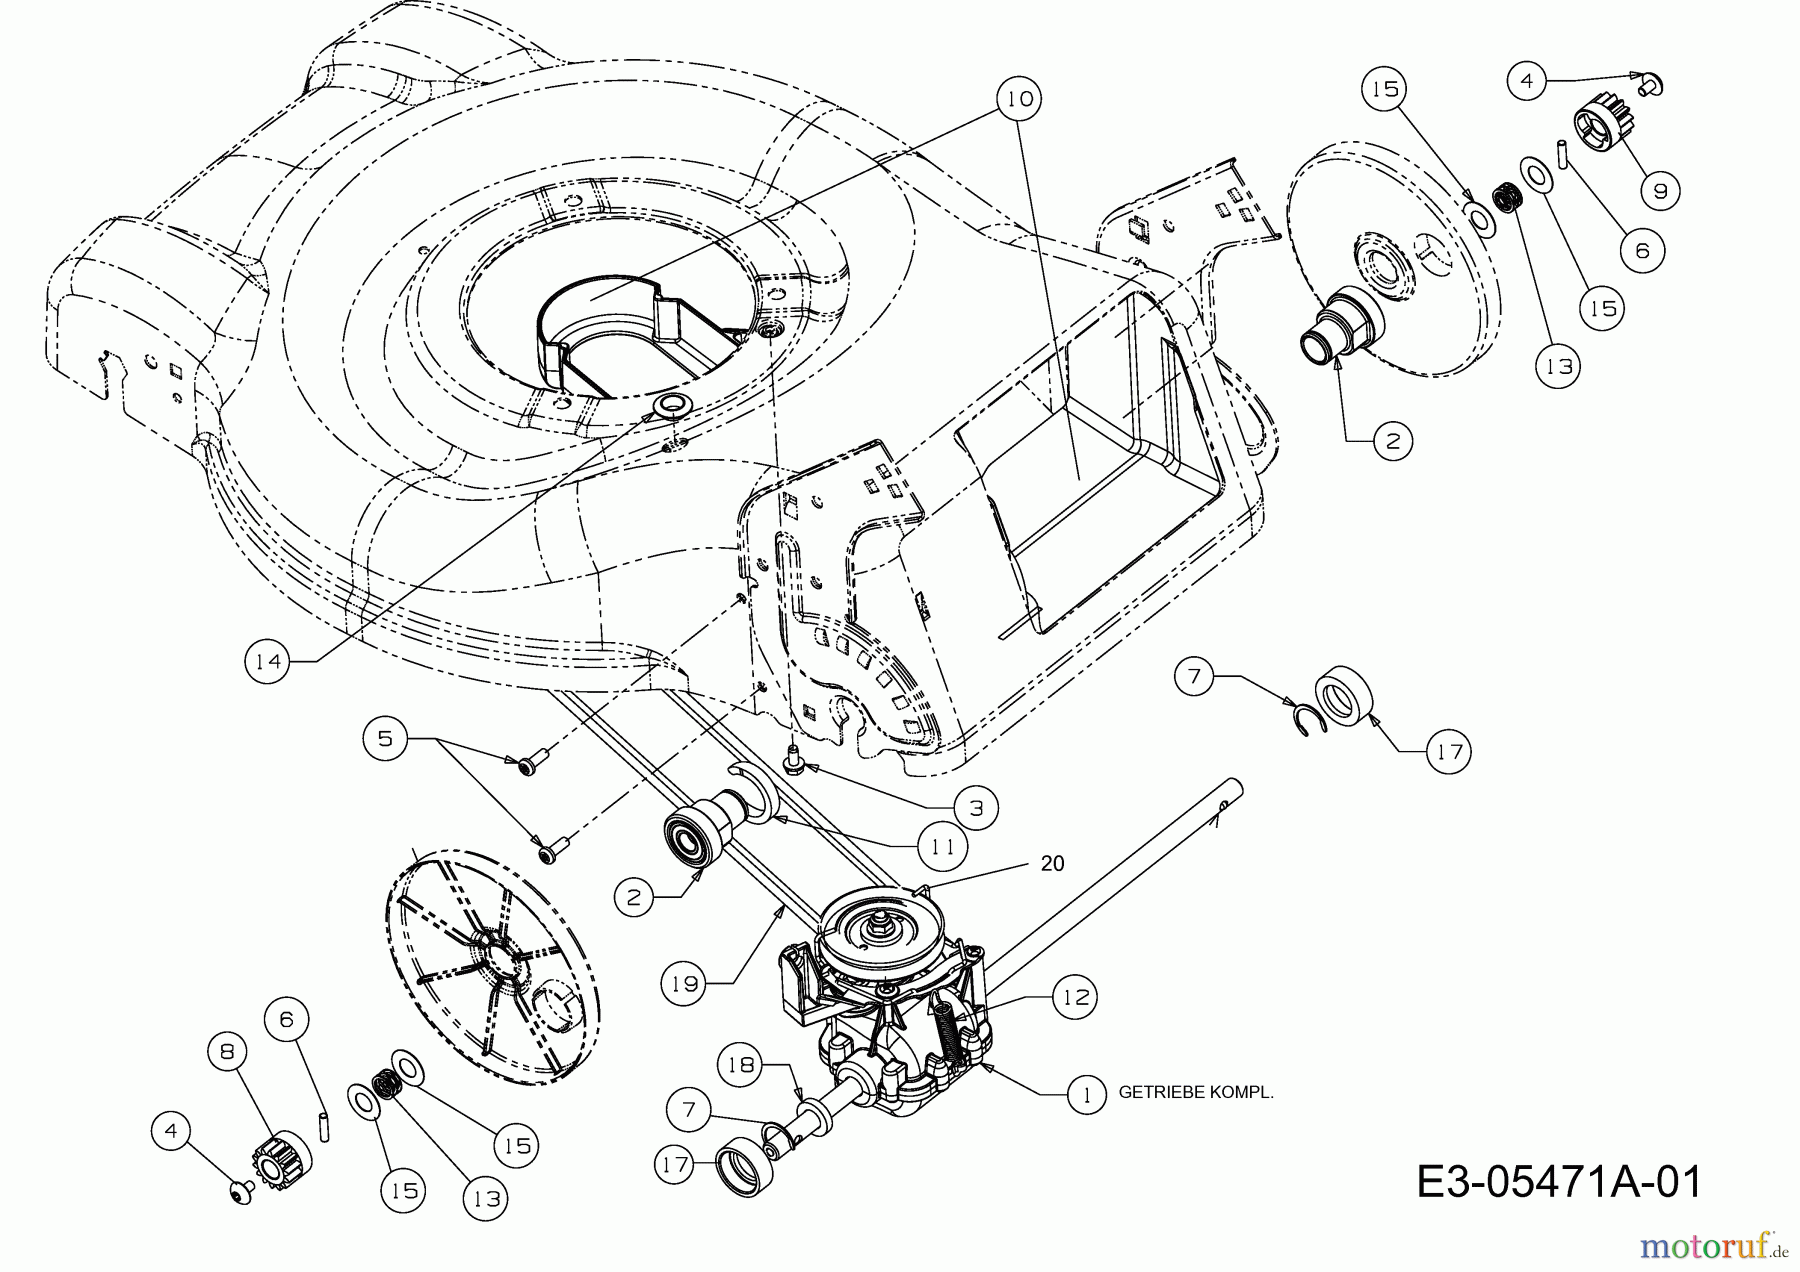  Plantiflor Petrol mower self propelled BMR 46 12E-J5JS601  (2011) Gearbox